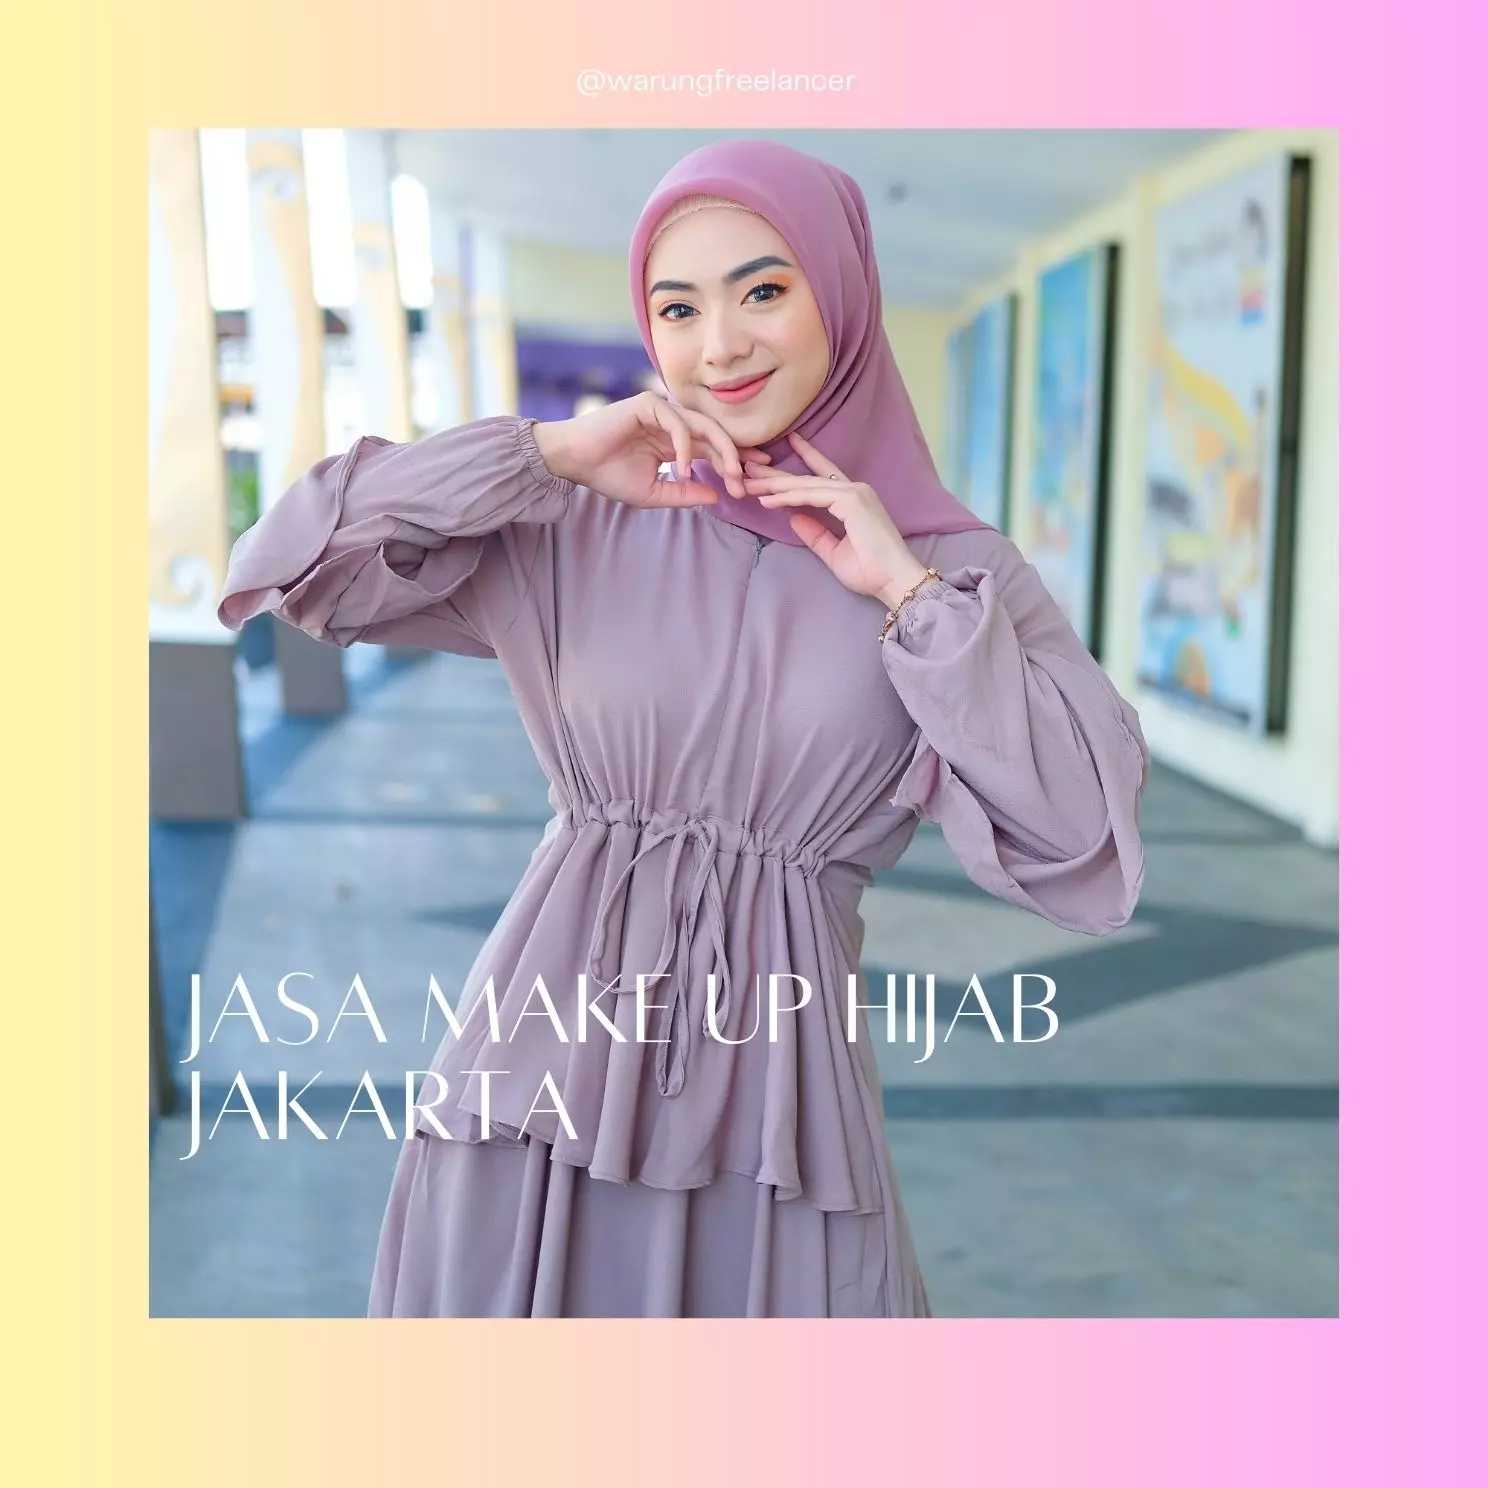 Jasa Make Up Hijab Jakarta